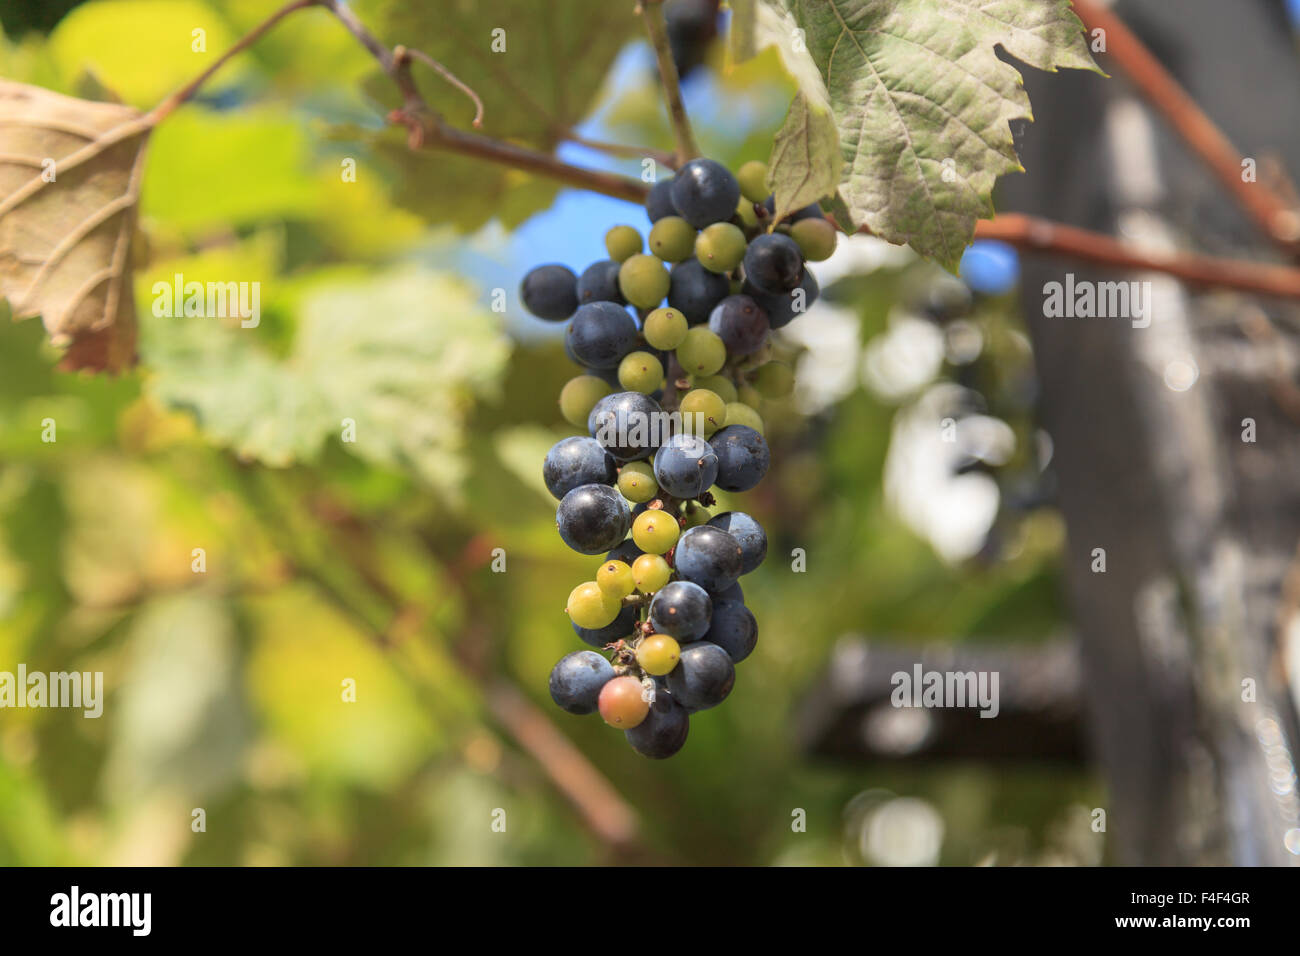 River bank wild grape, Vitis riparia, vine growing green grapes in summer Stock Photo